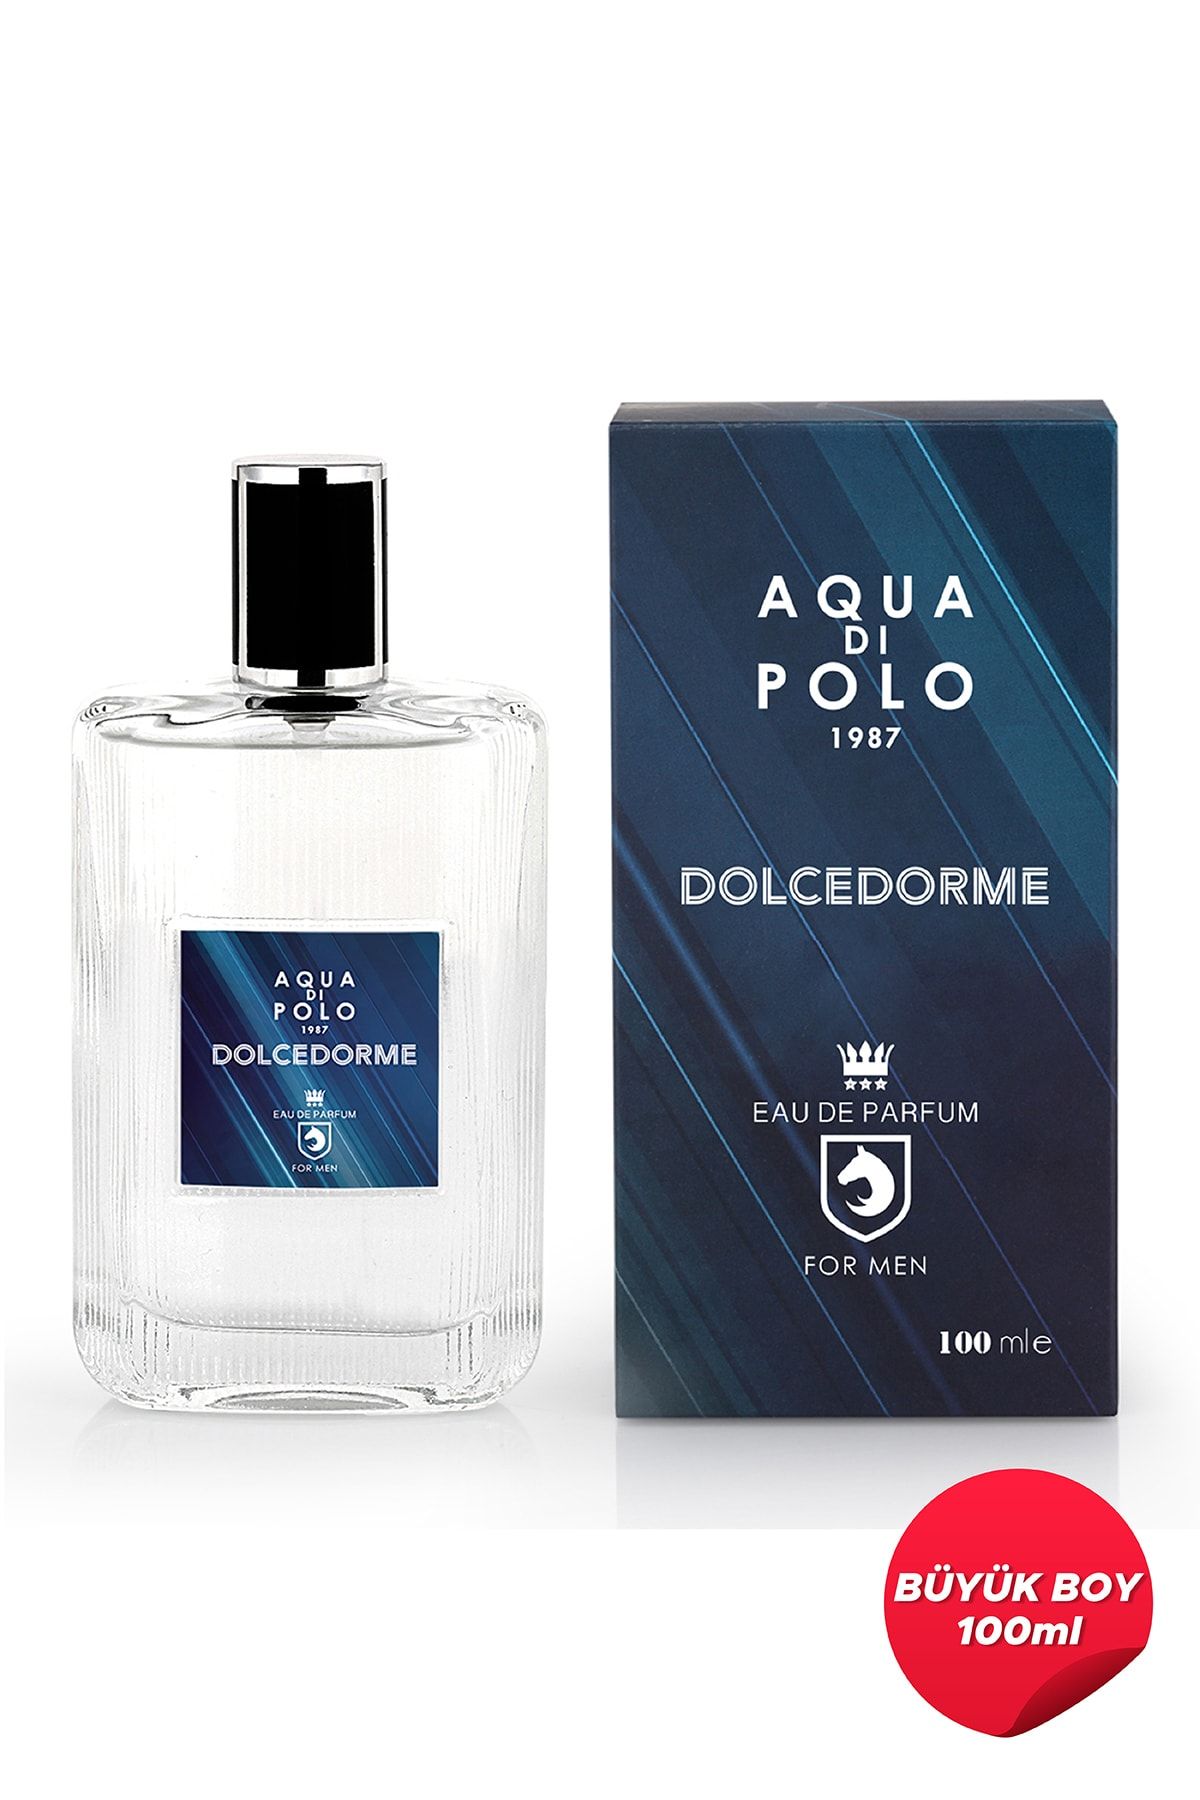 Aqua Di Polo 1987 Dolcedorme 100 ml Edp Erkek Parfüm 8682367054647